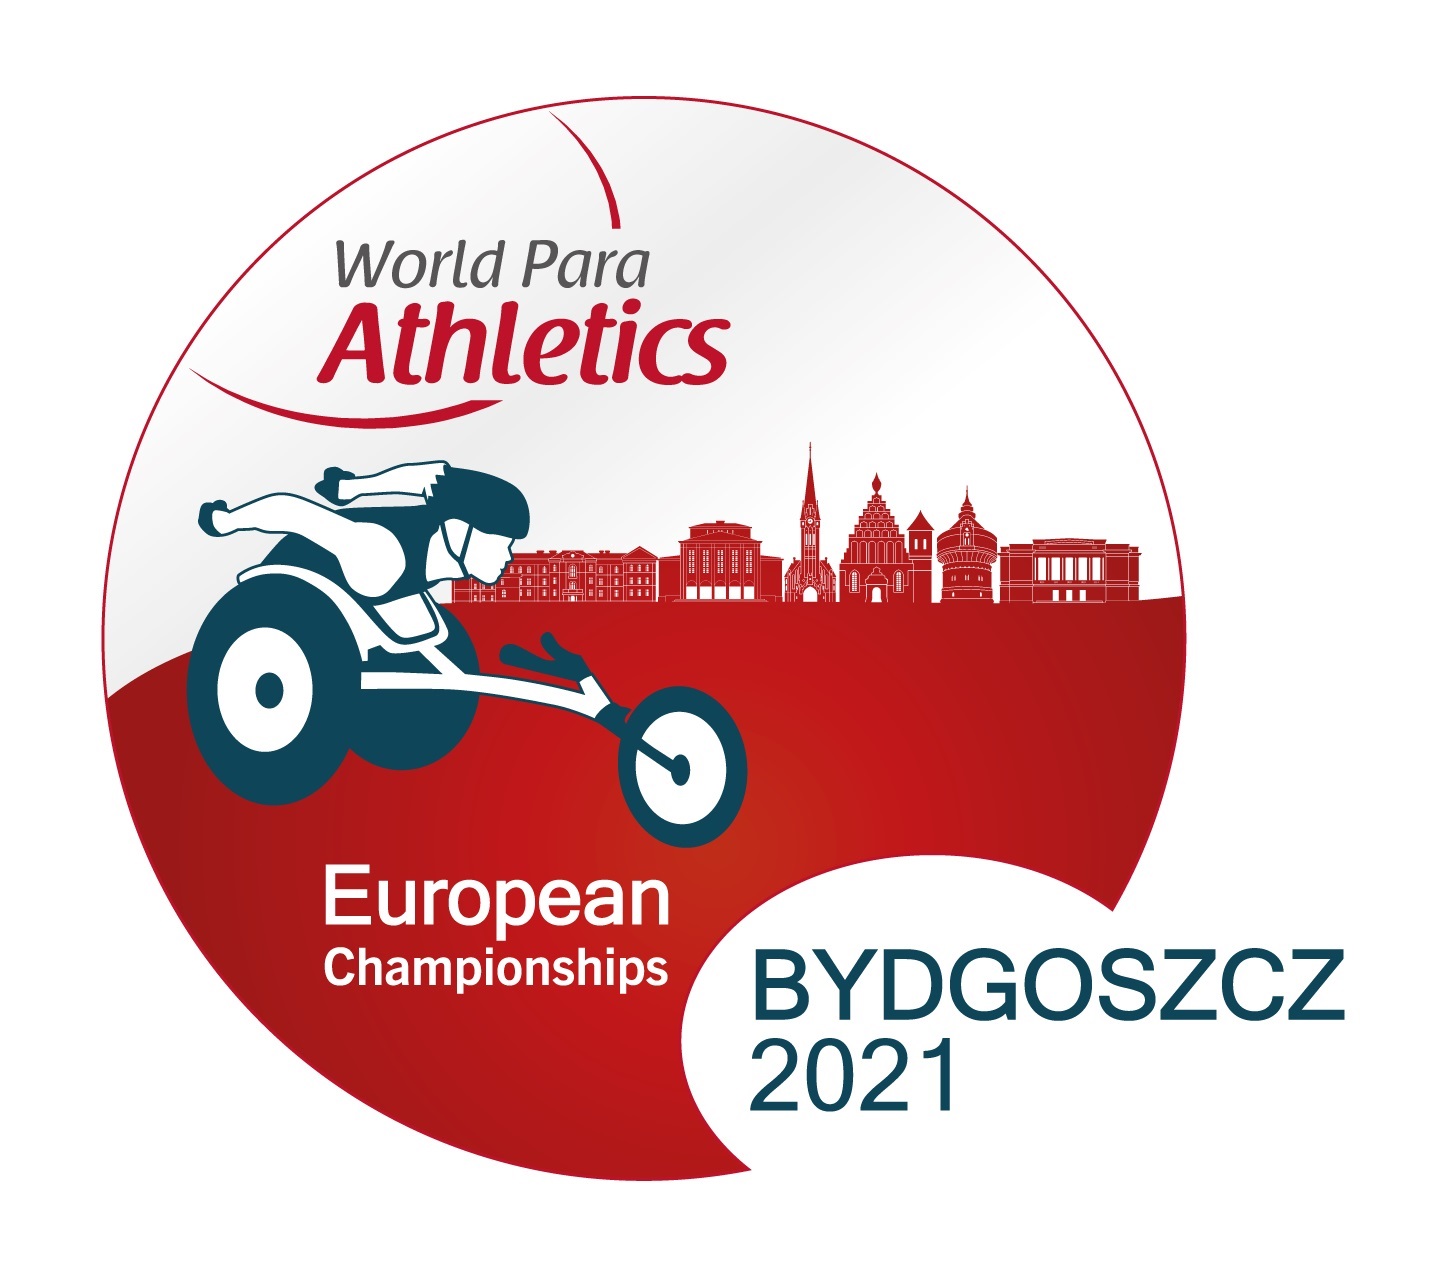 Bydgoszcz 2021 World Para Athletics European Championships